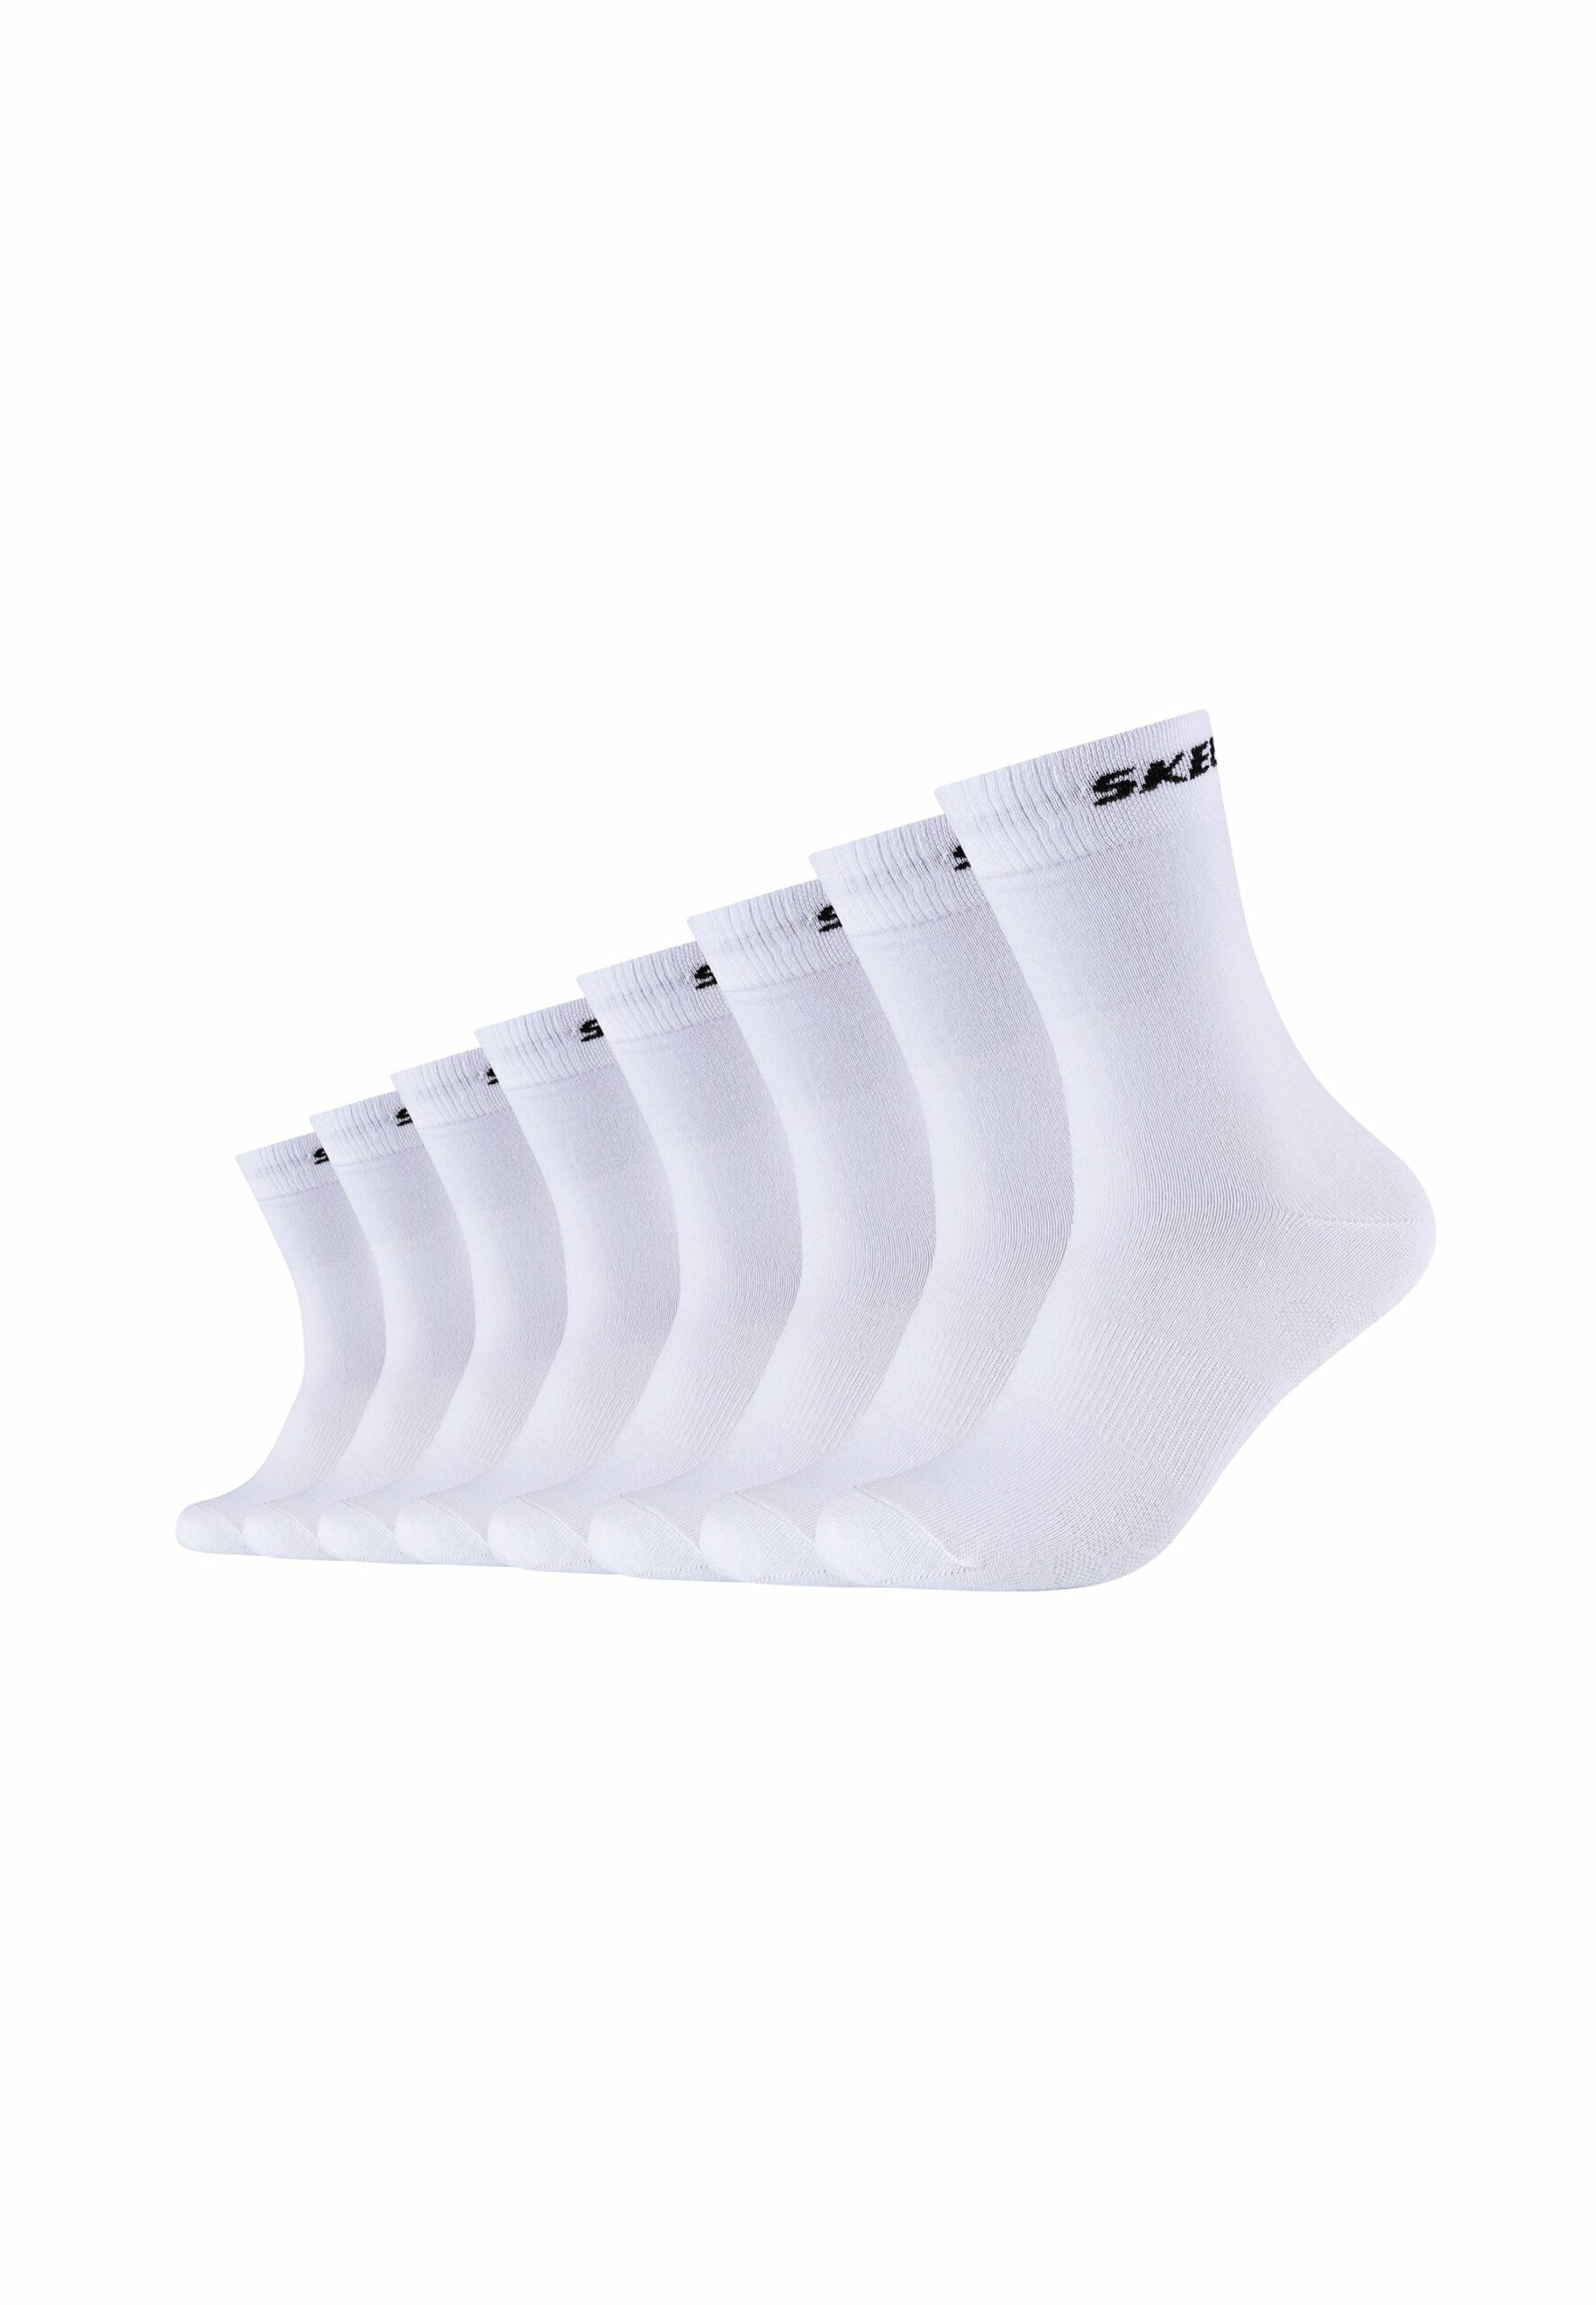 Skechers Socken Mesh Ventilation organic 8er Pack white kaufen bei